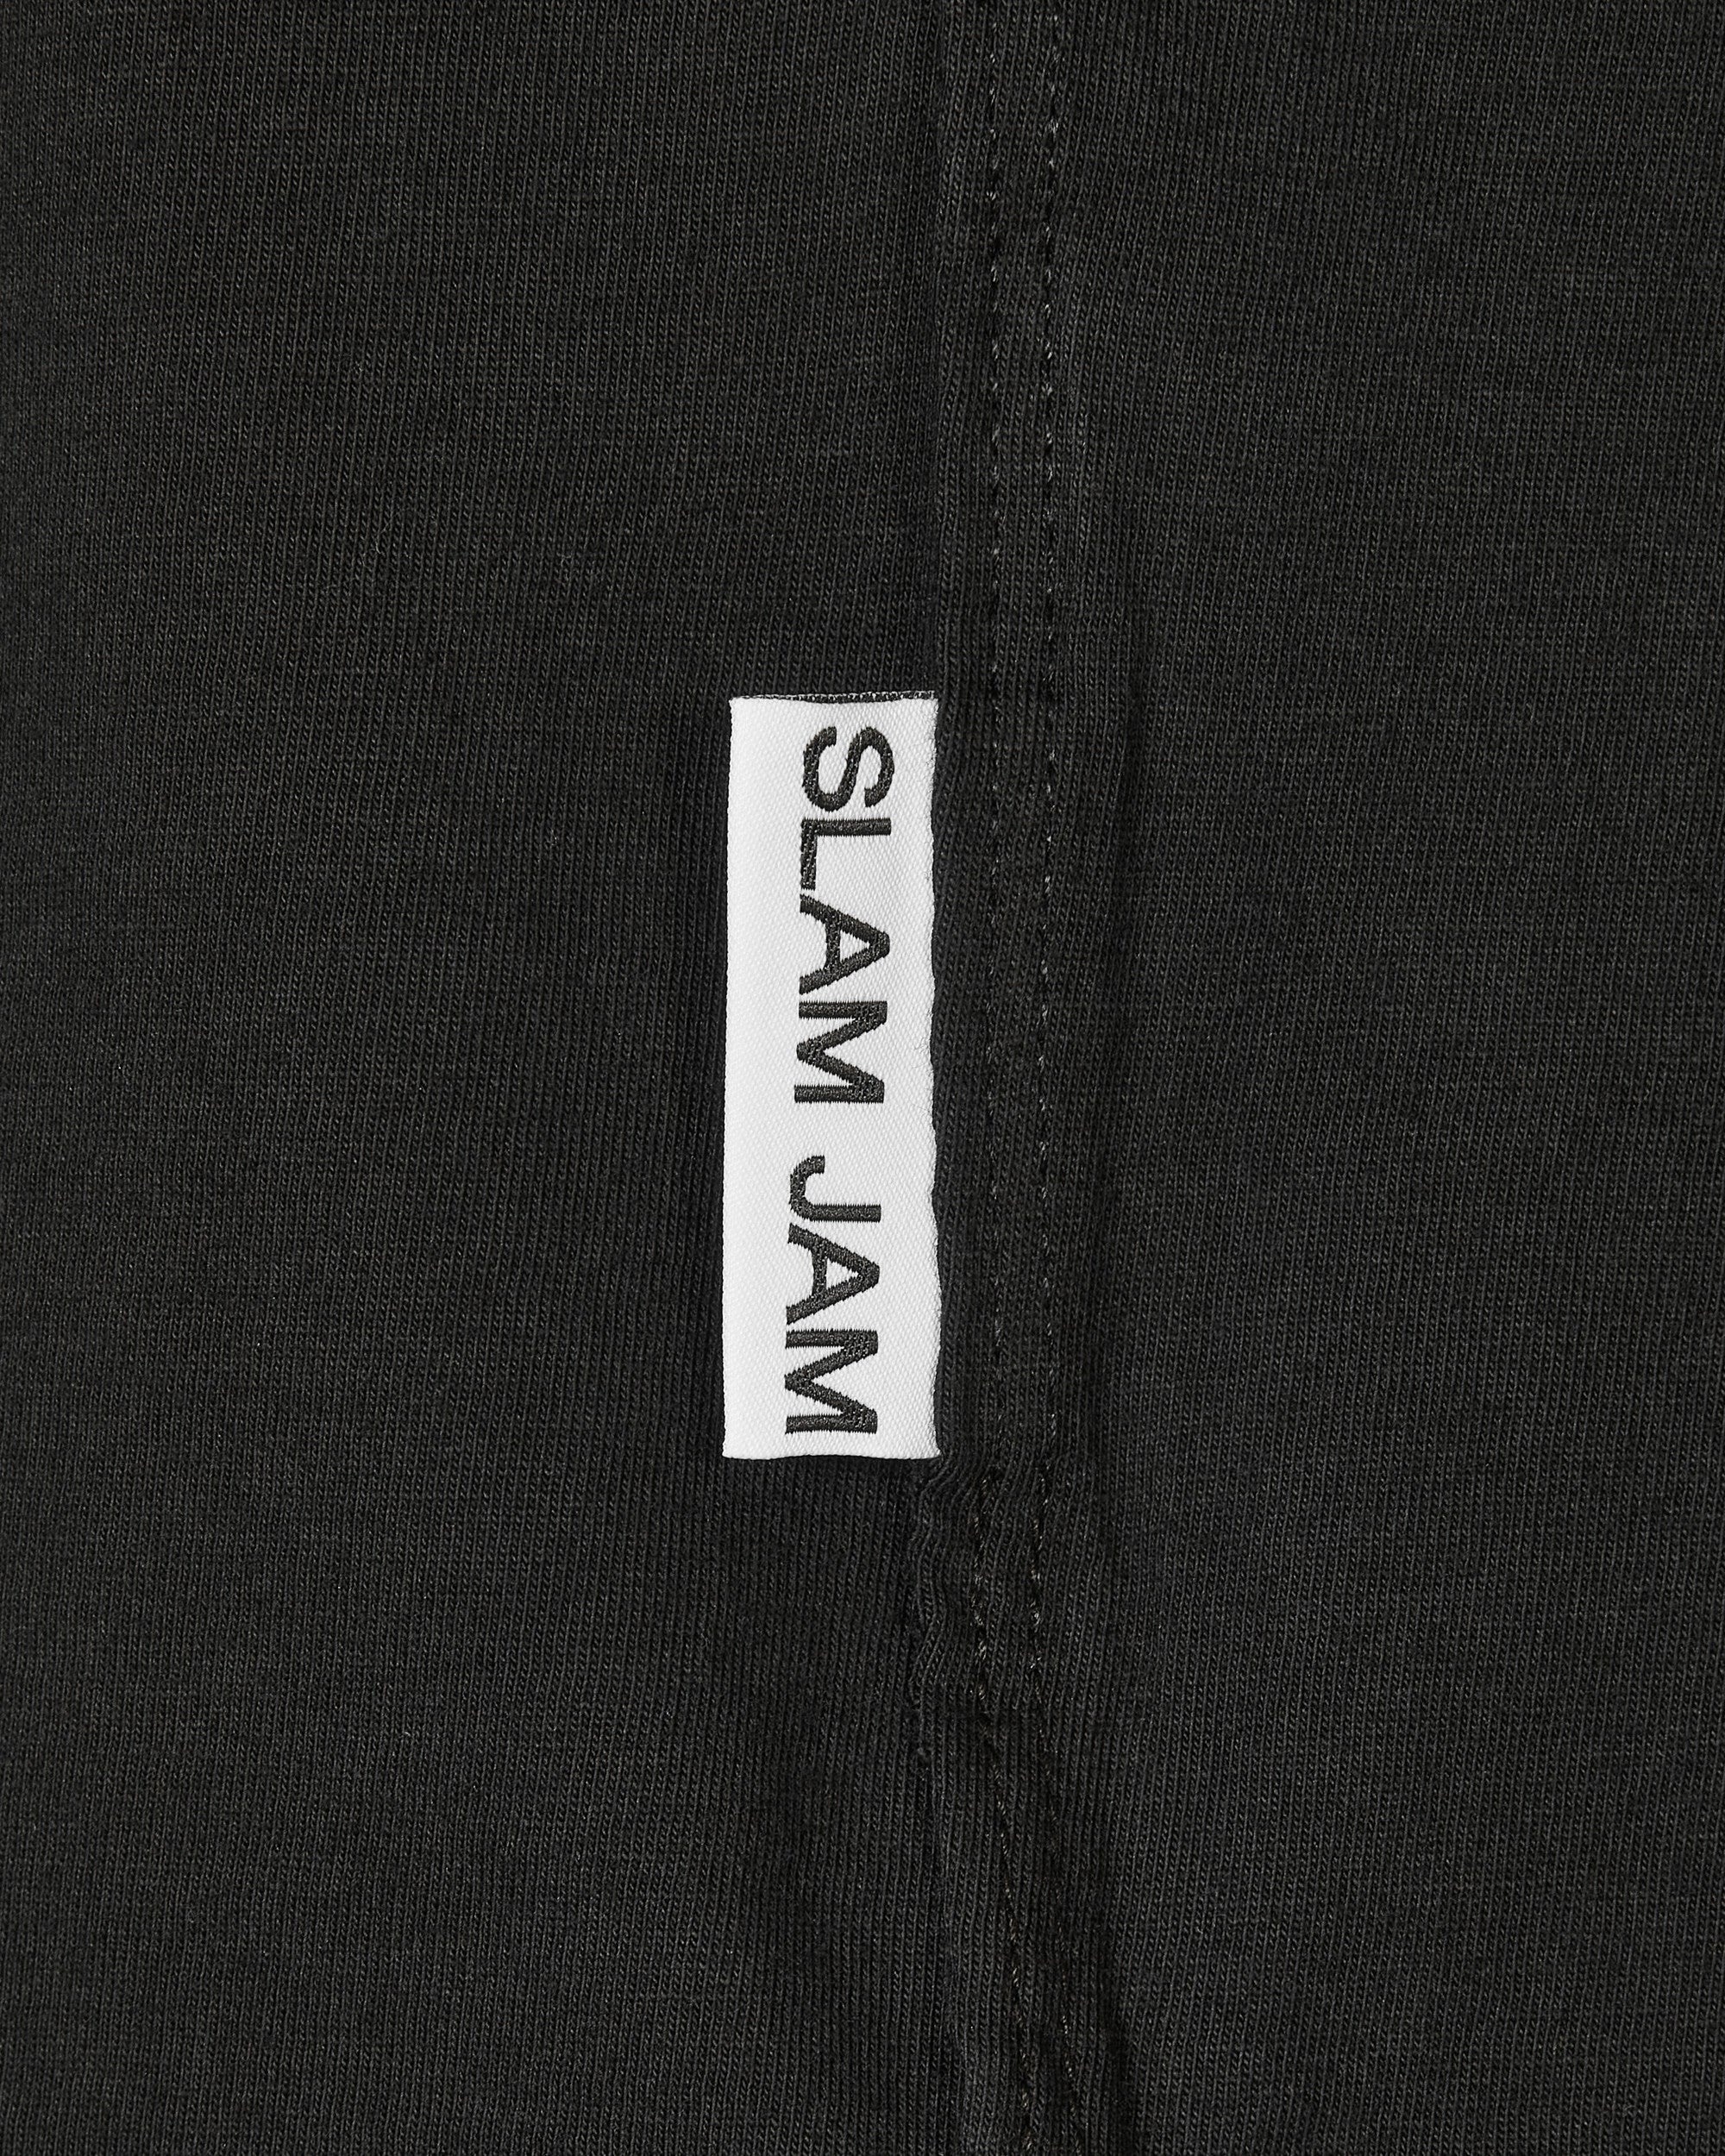 Slam Jam Bi-Pack White and Black White Black T-Shirts Shortsleeve SBM0022FA14 WTHBL01